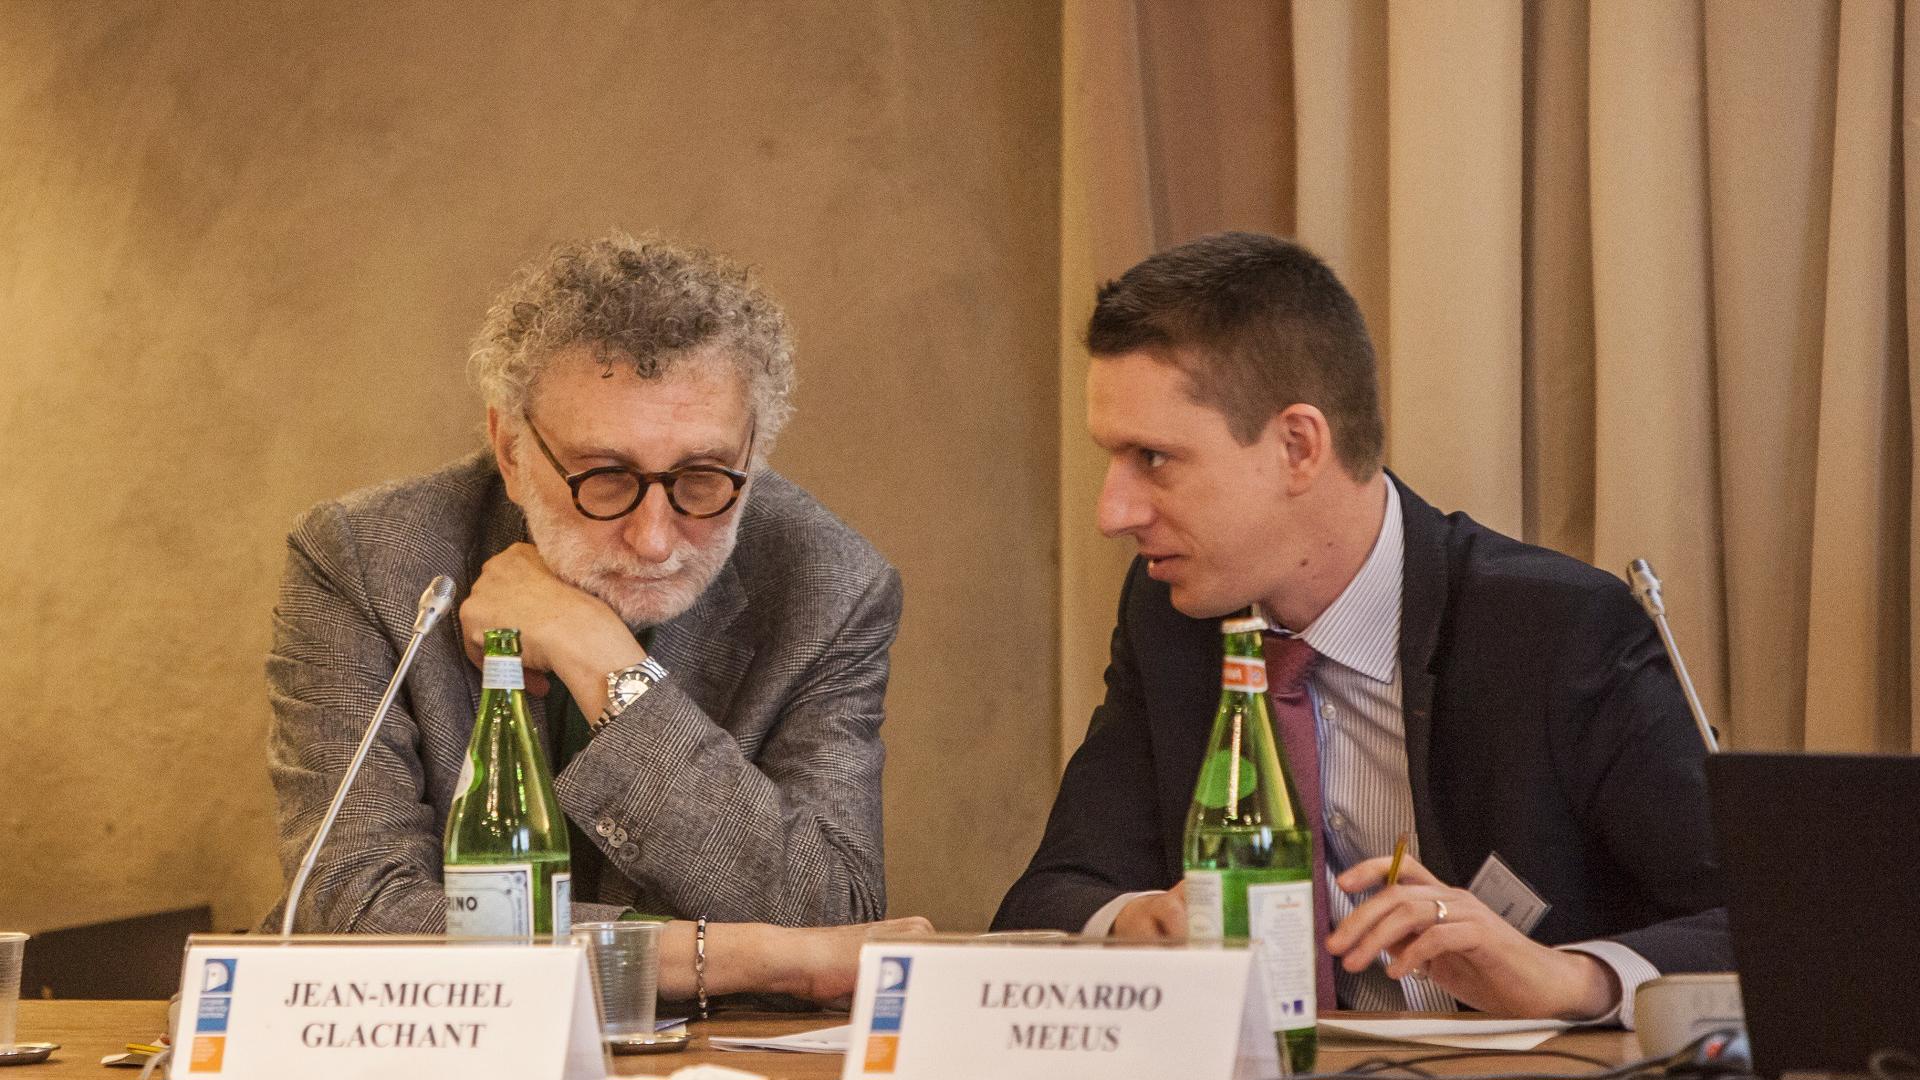 Jean-Michel Glachant and Leonardo Meeus at an FSR workshop in 2017